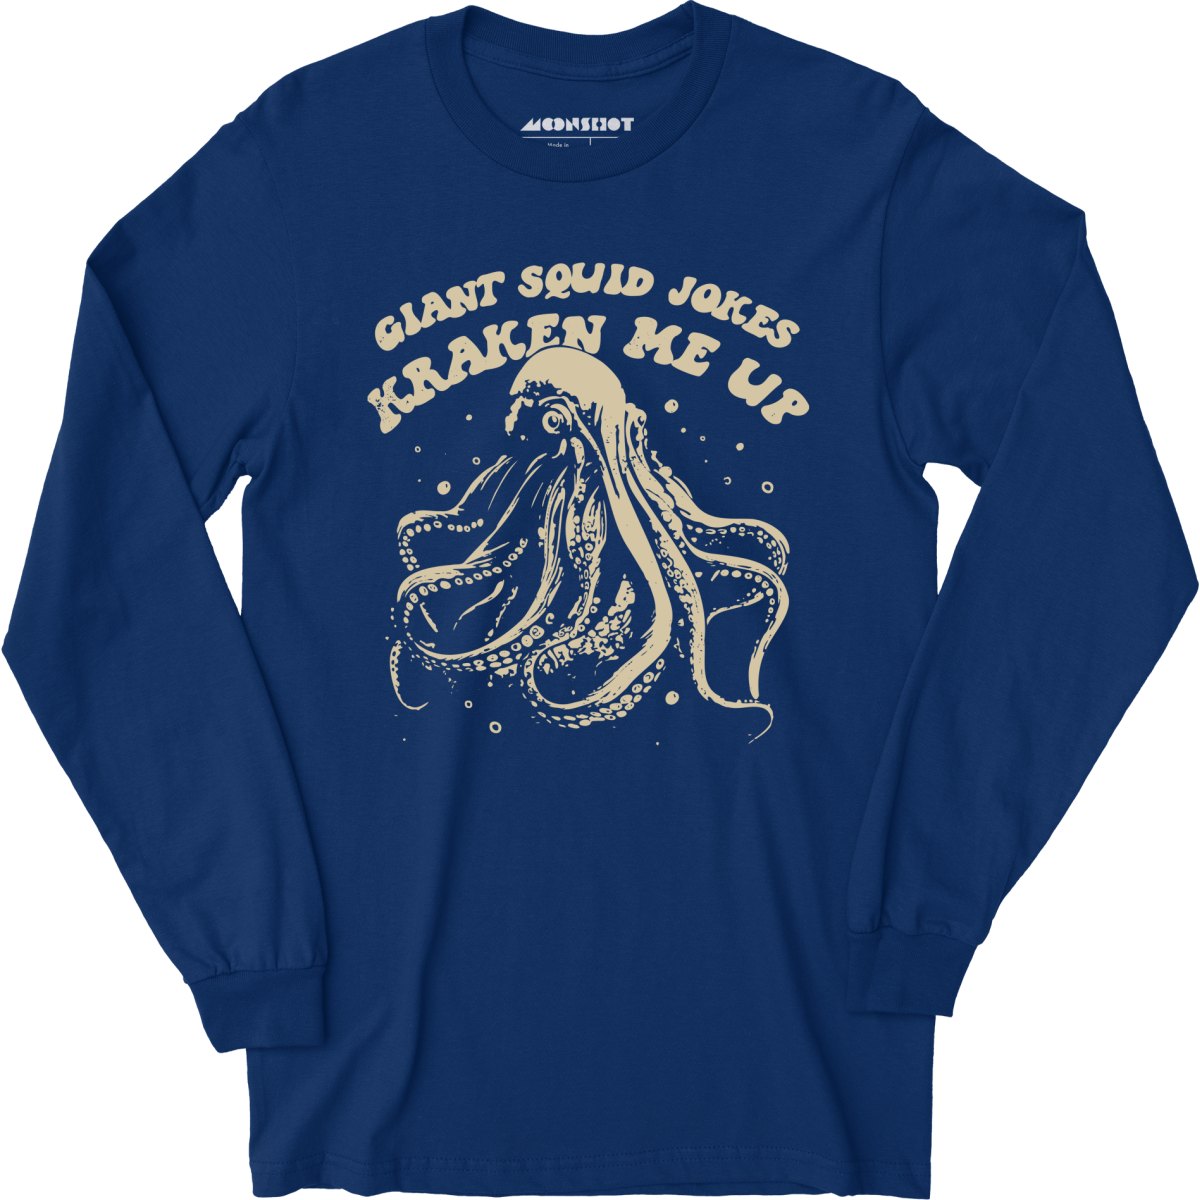 squid jokes